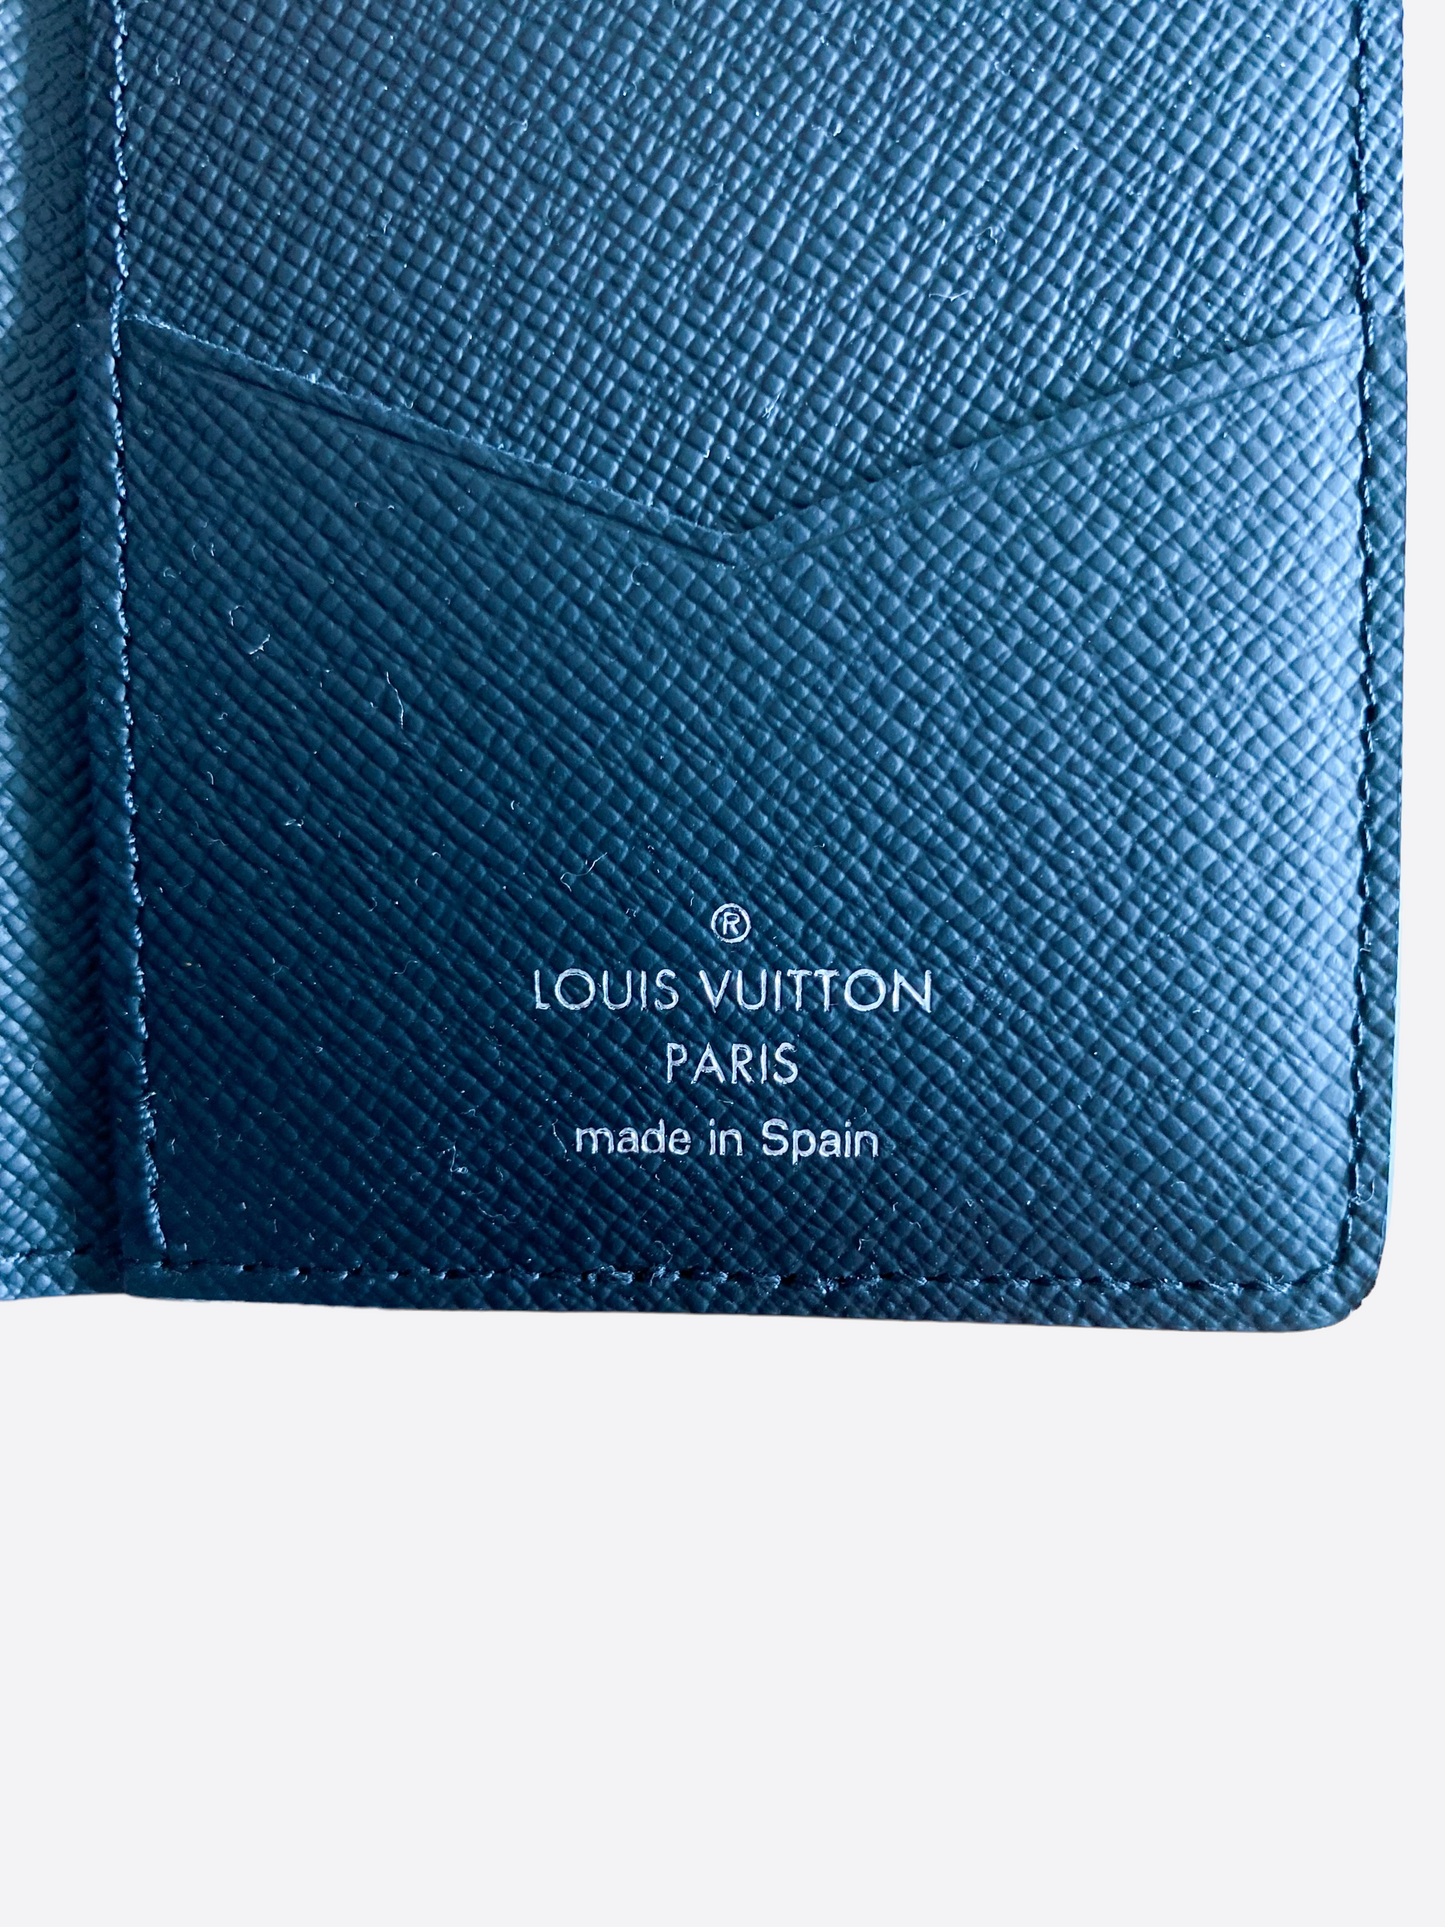 Shop Louis Vuitton pocket organizer by Luxurywithdiscounts